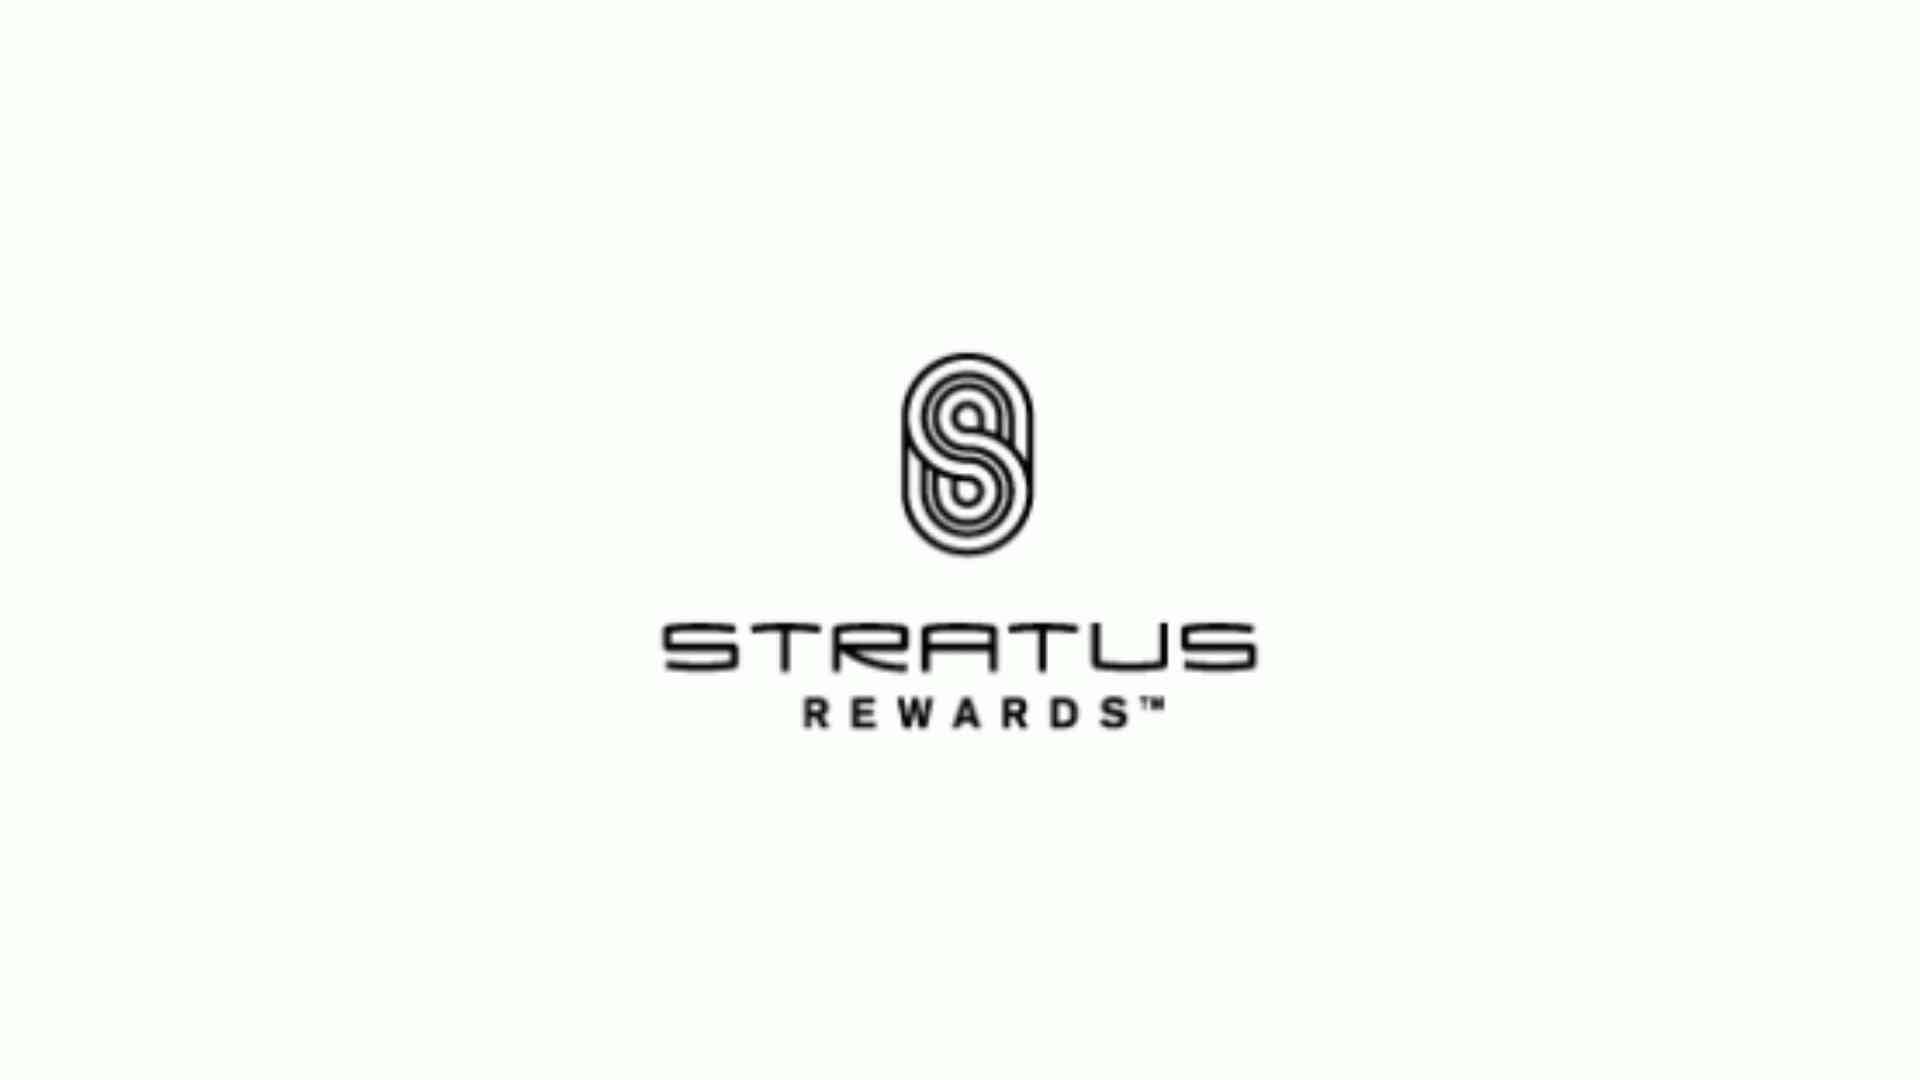 Como funciona o Stratus Rewards White? Fonte: Stratus Rewards.